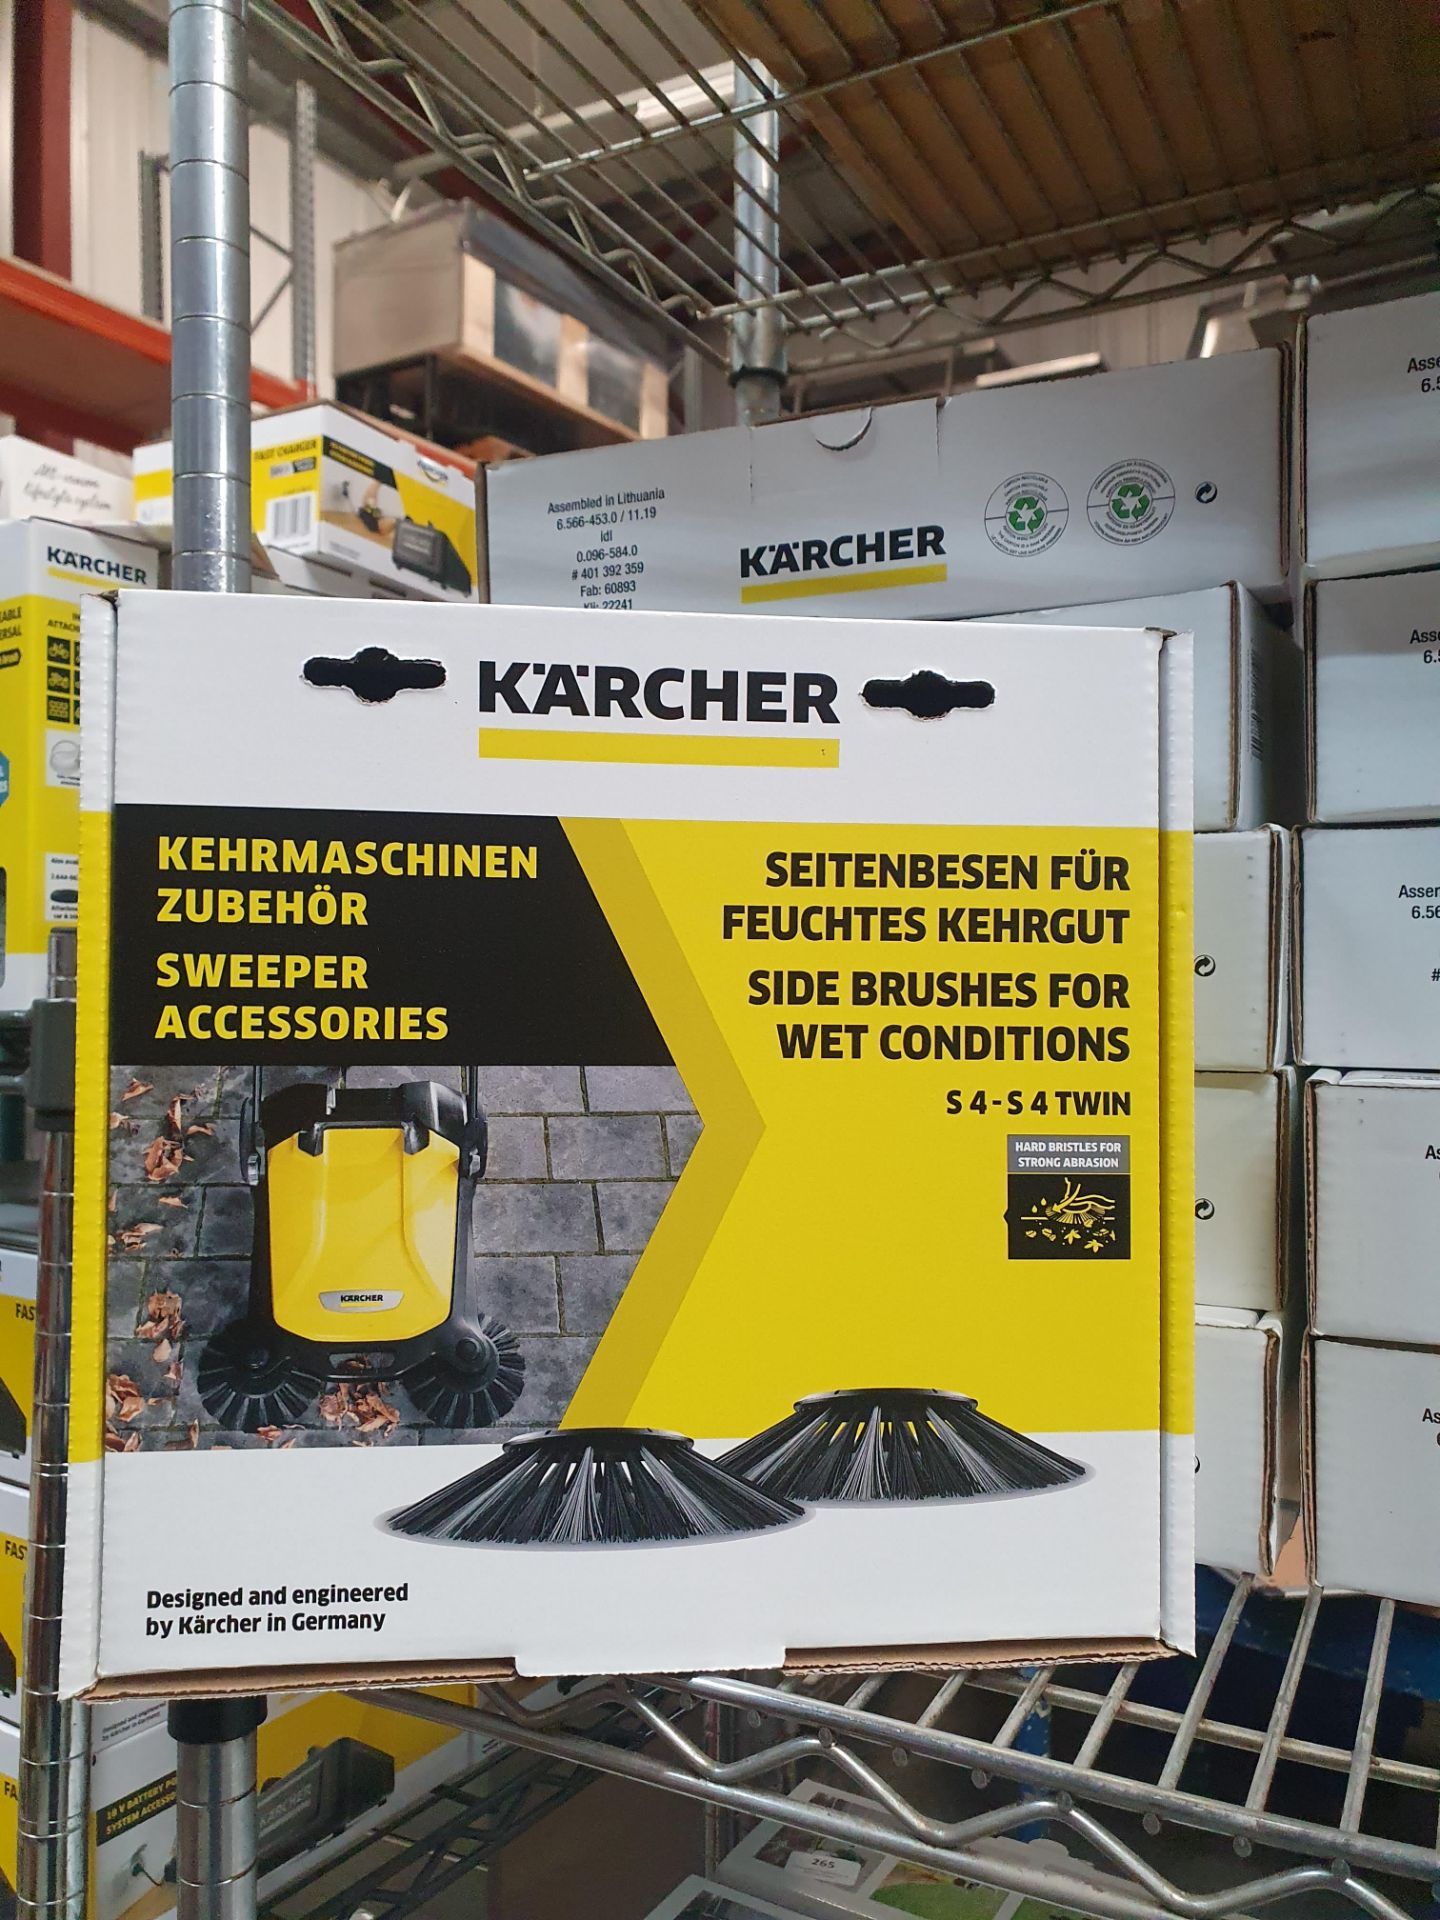 * 6 x Karcher sweeper accessories